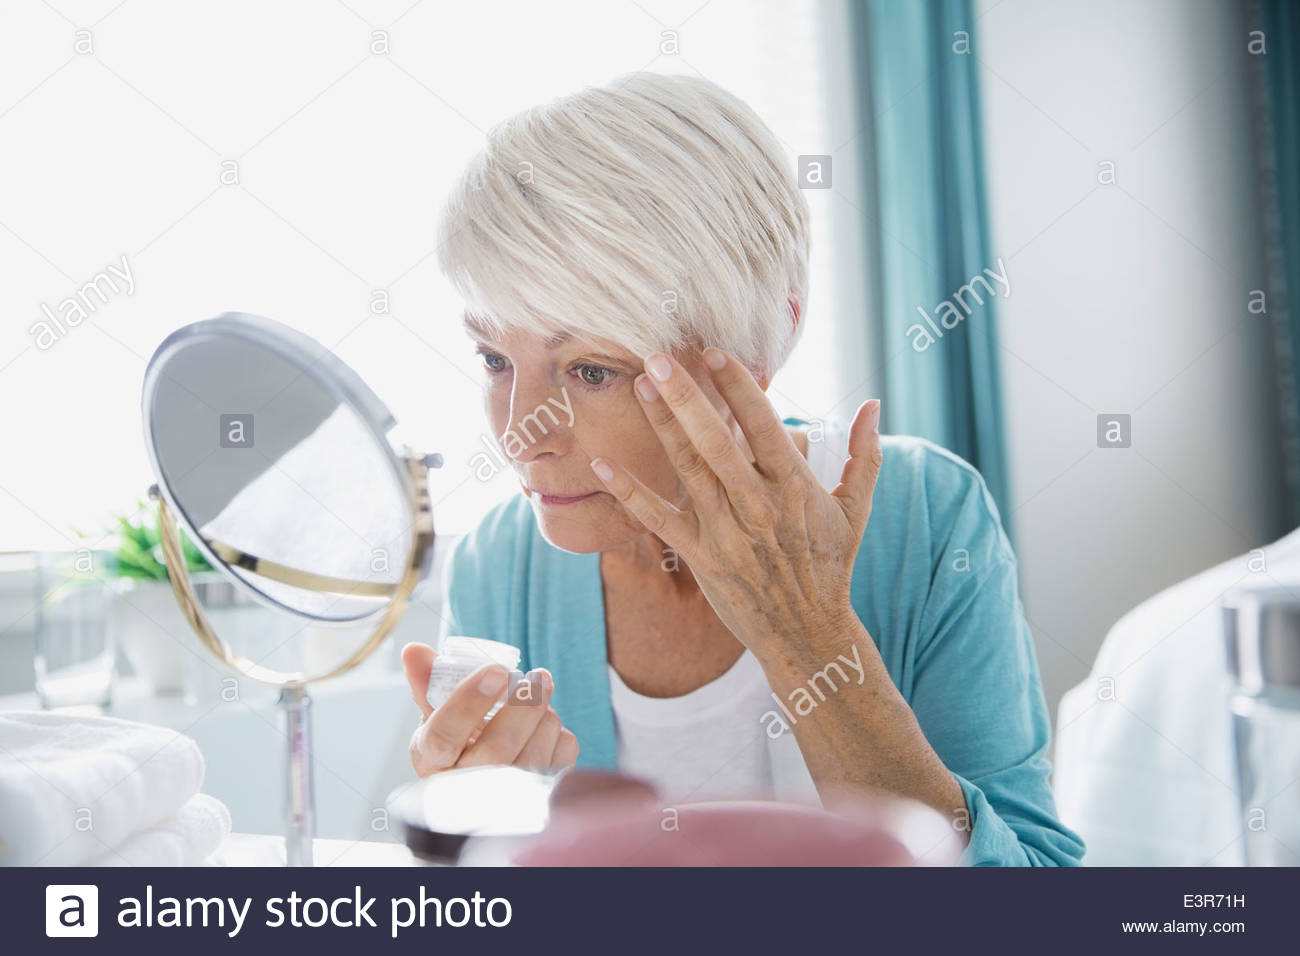 Woman applying wrinkle cream Stock Photo